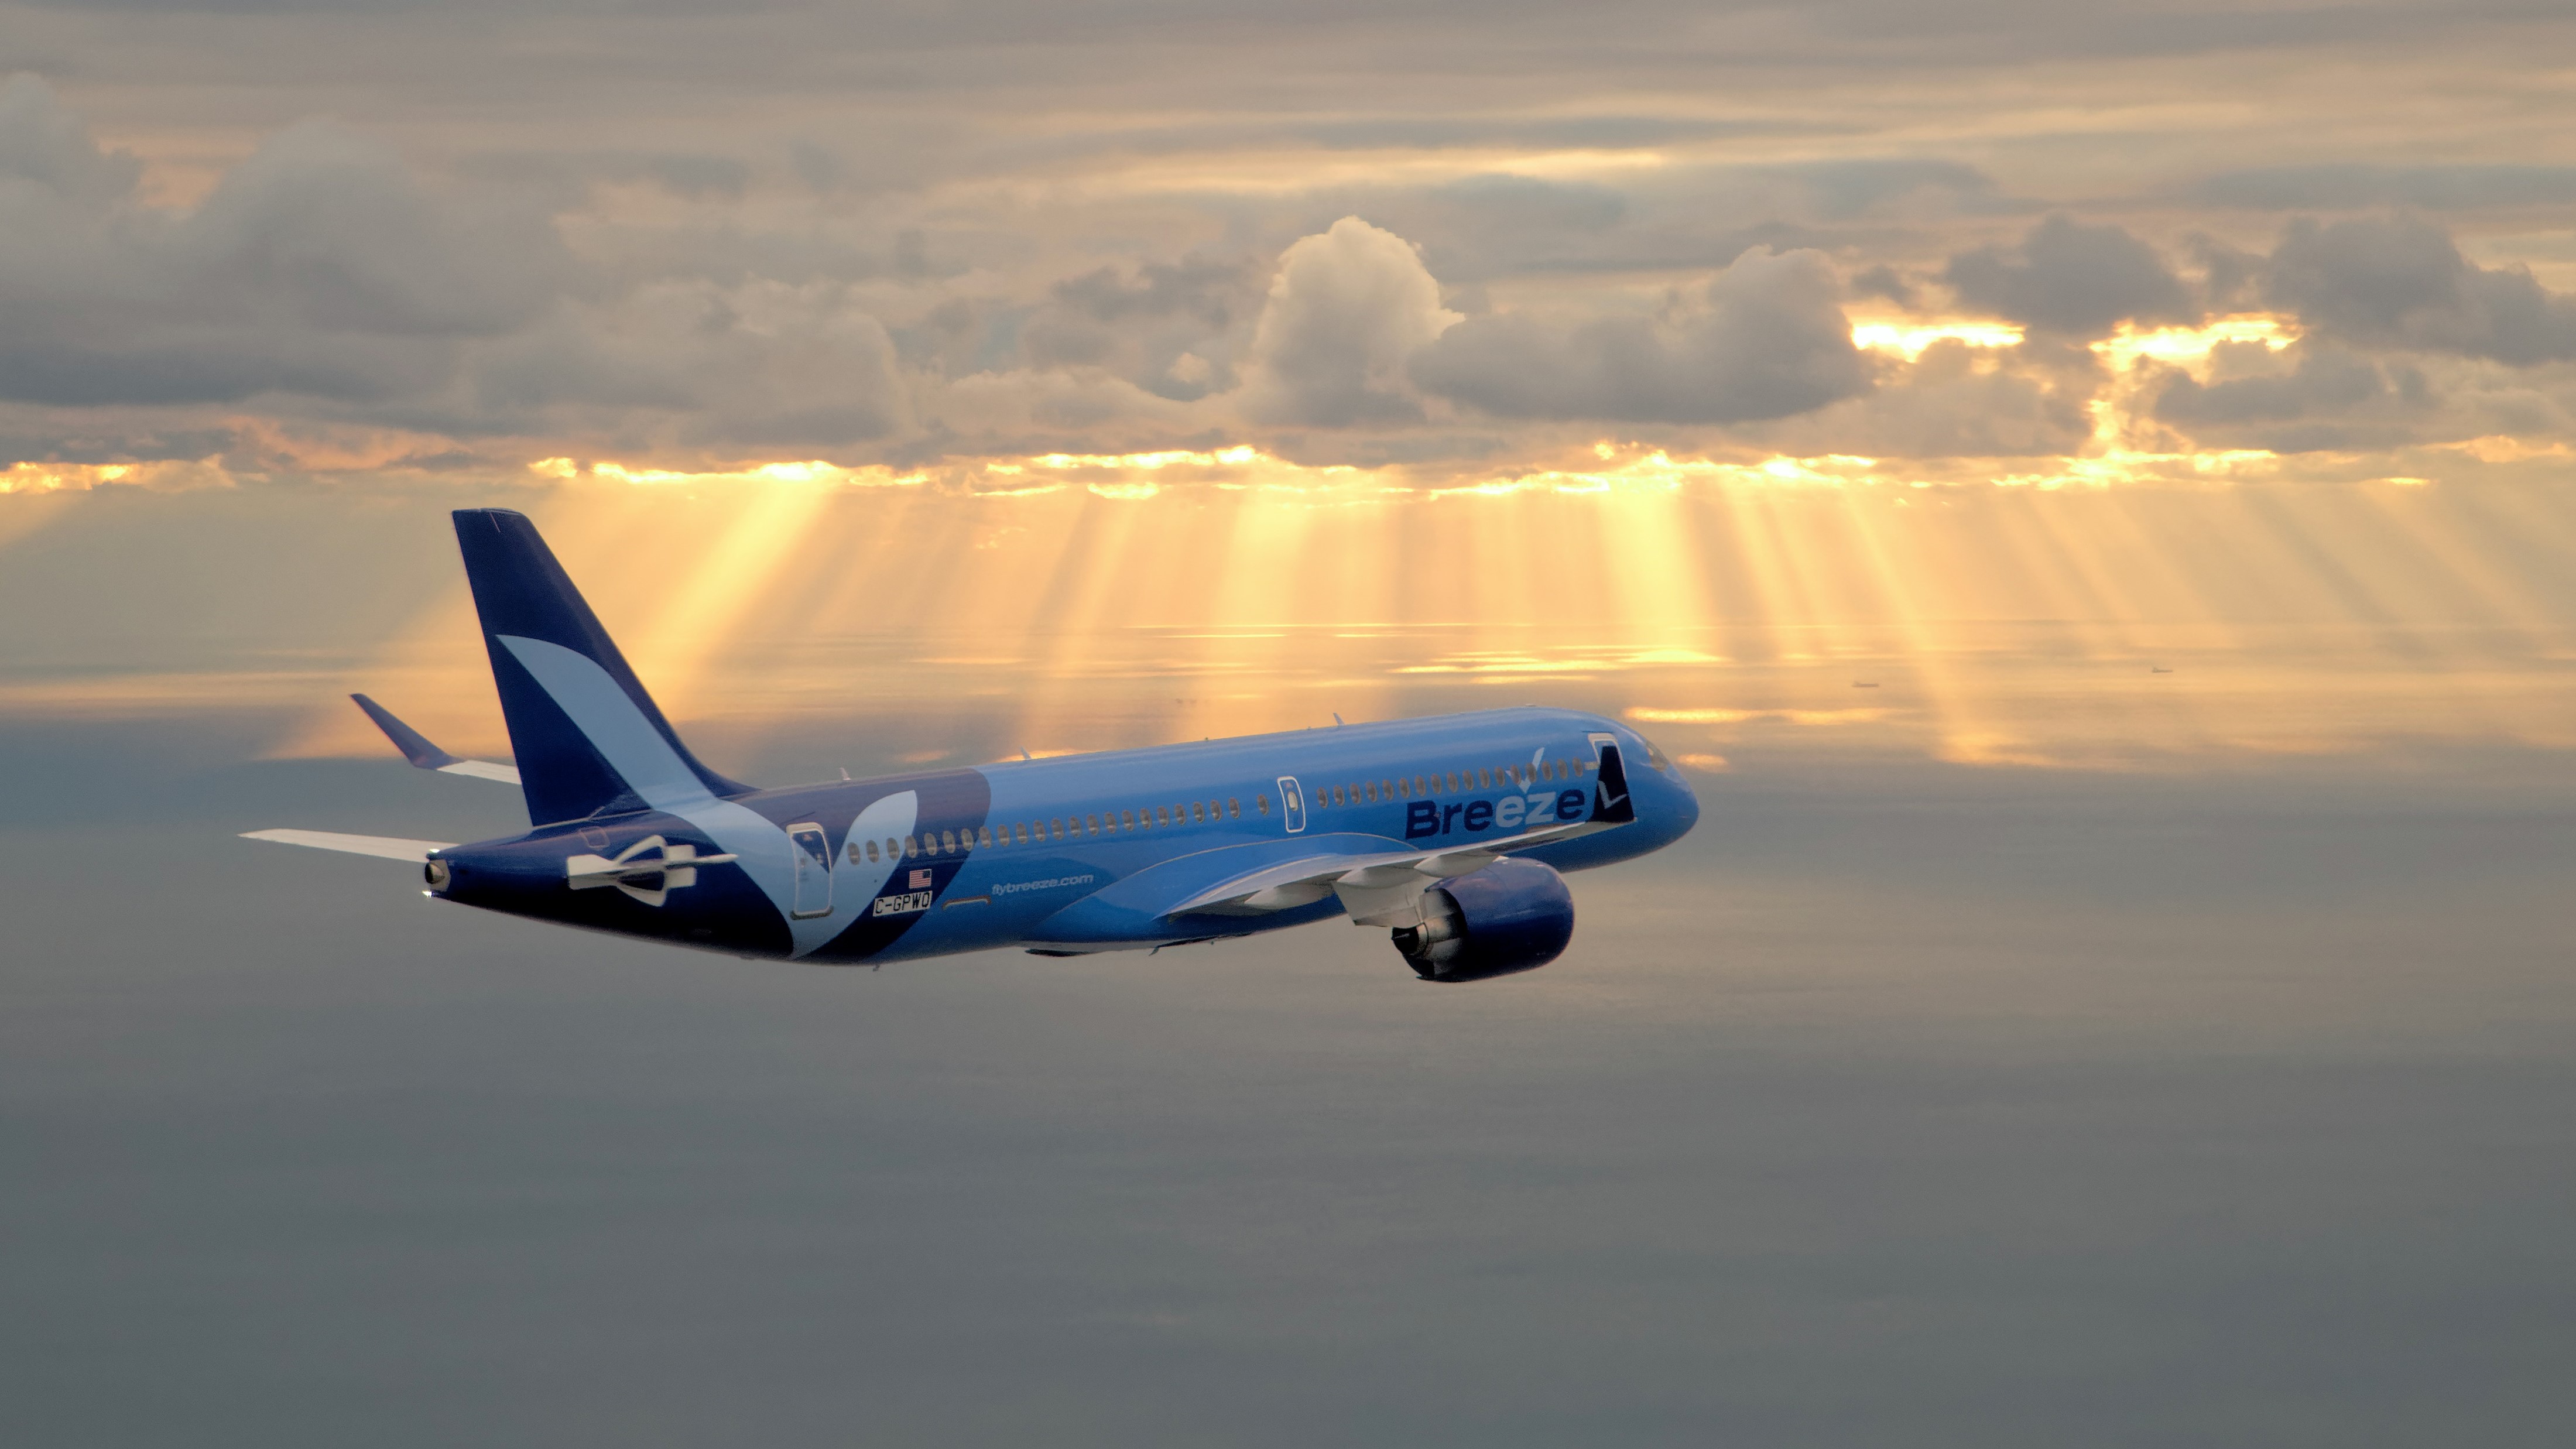 Breeze Airways to commence service form Phoenix Sky Harbor